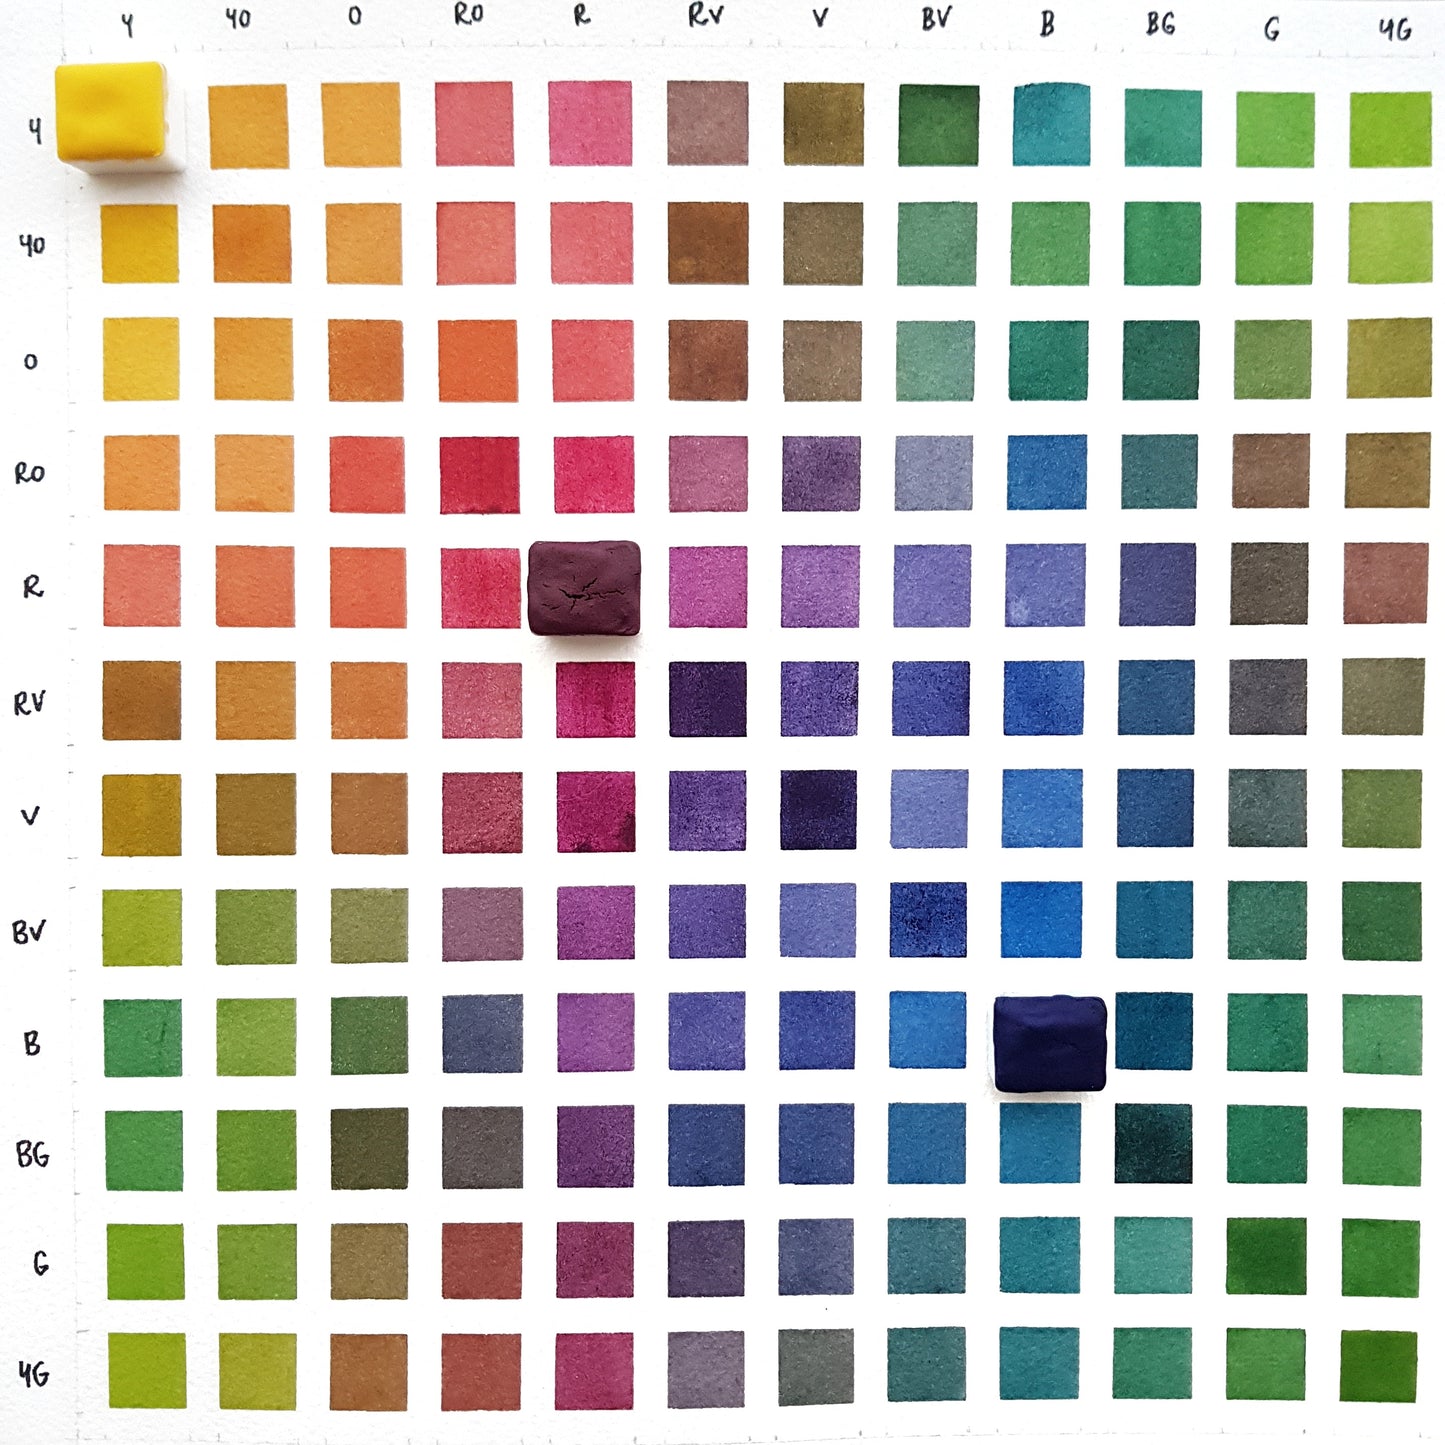 Primary Palette (3 colours)